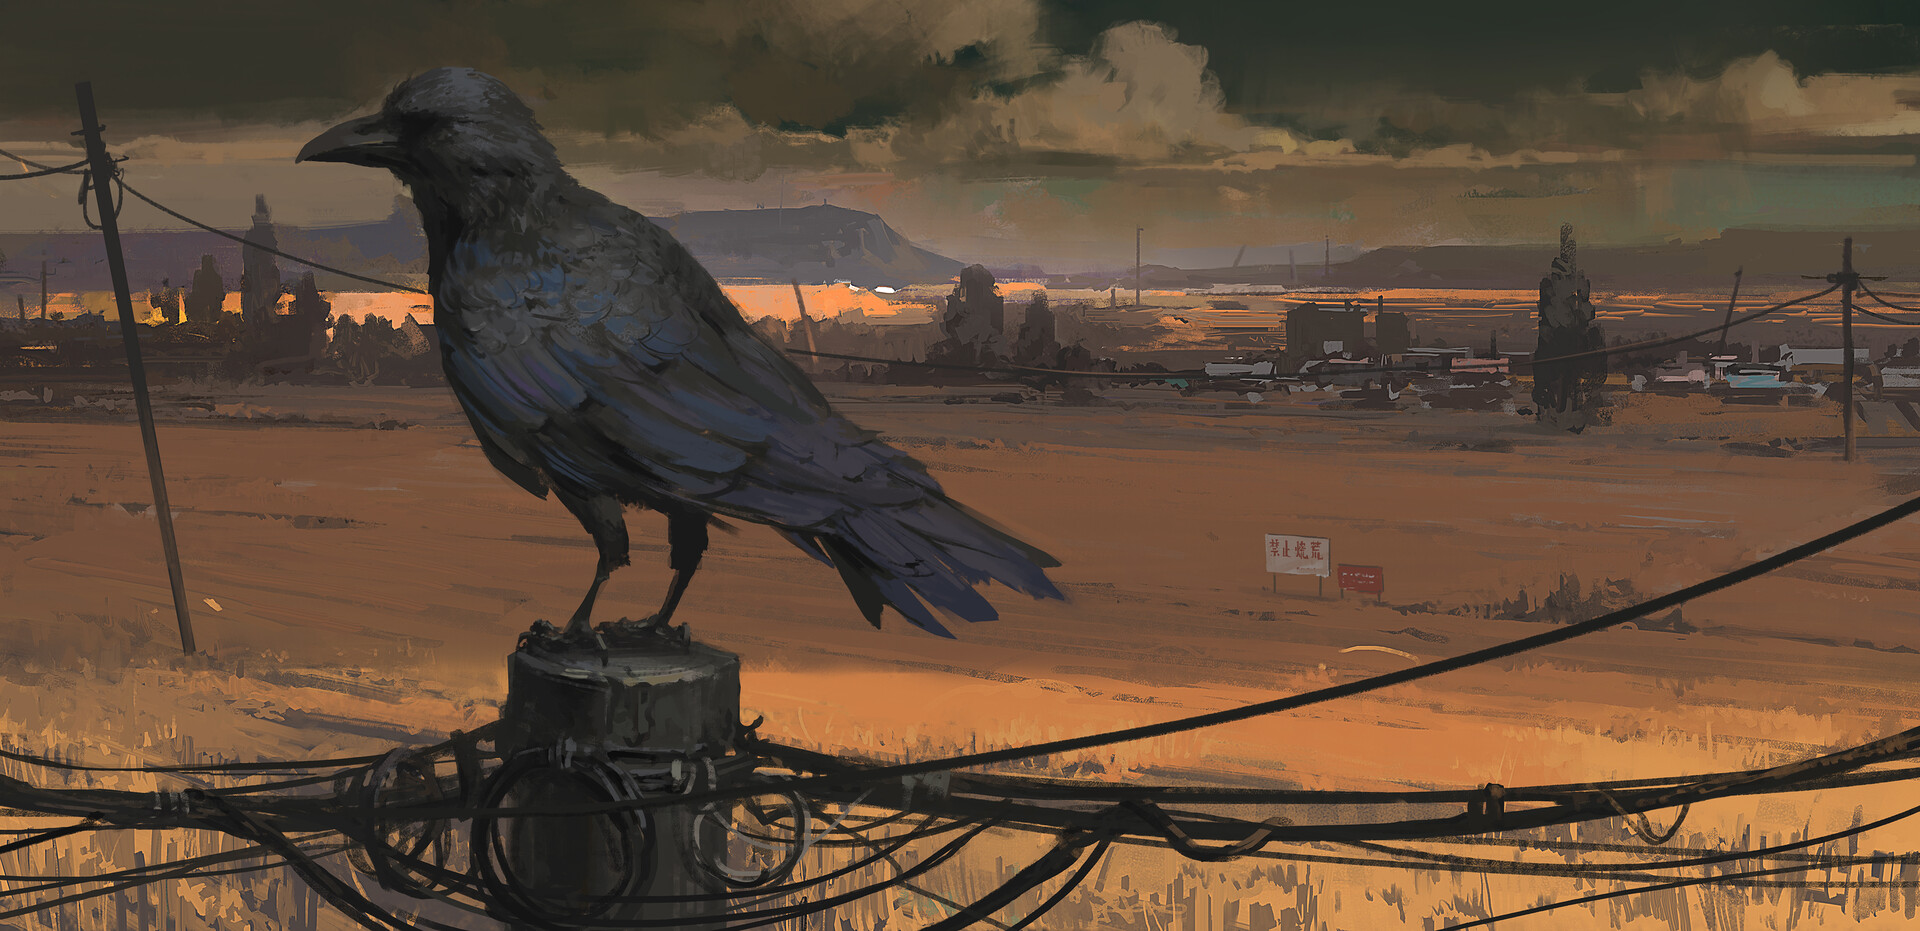 General 1920x931 su jian illustration field utility pole village crow kanji artwork